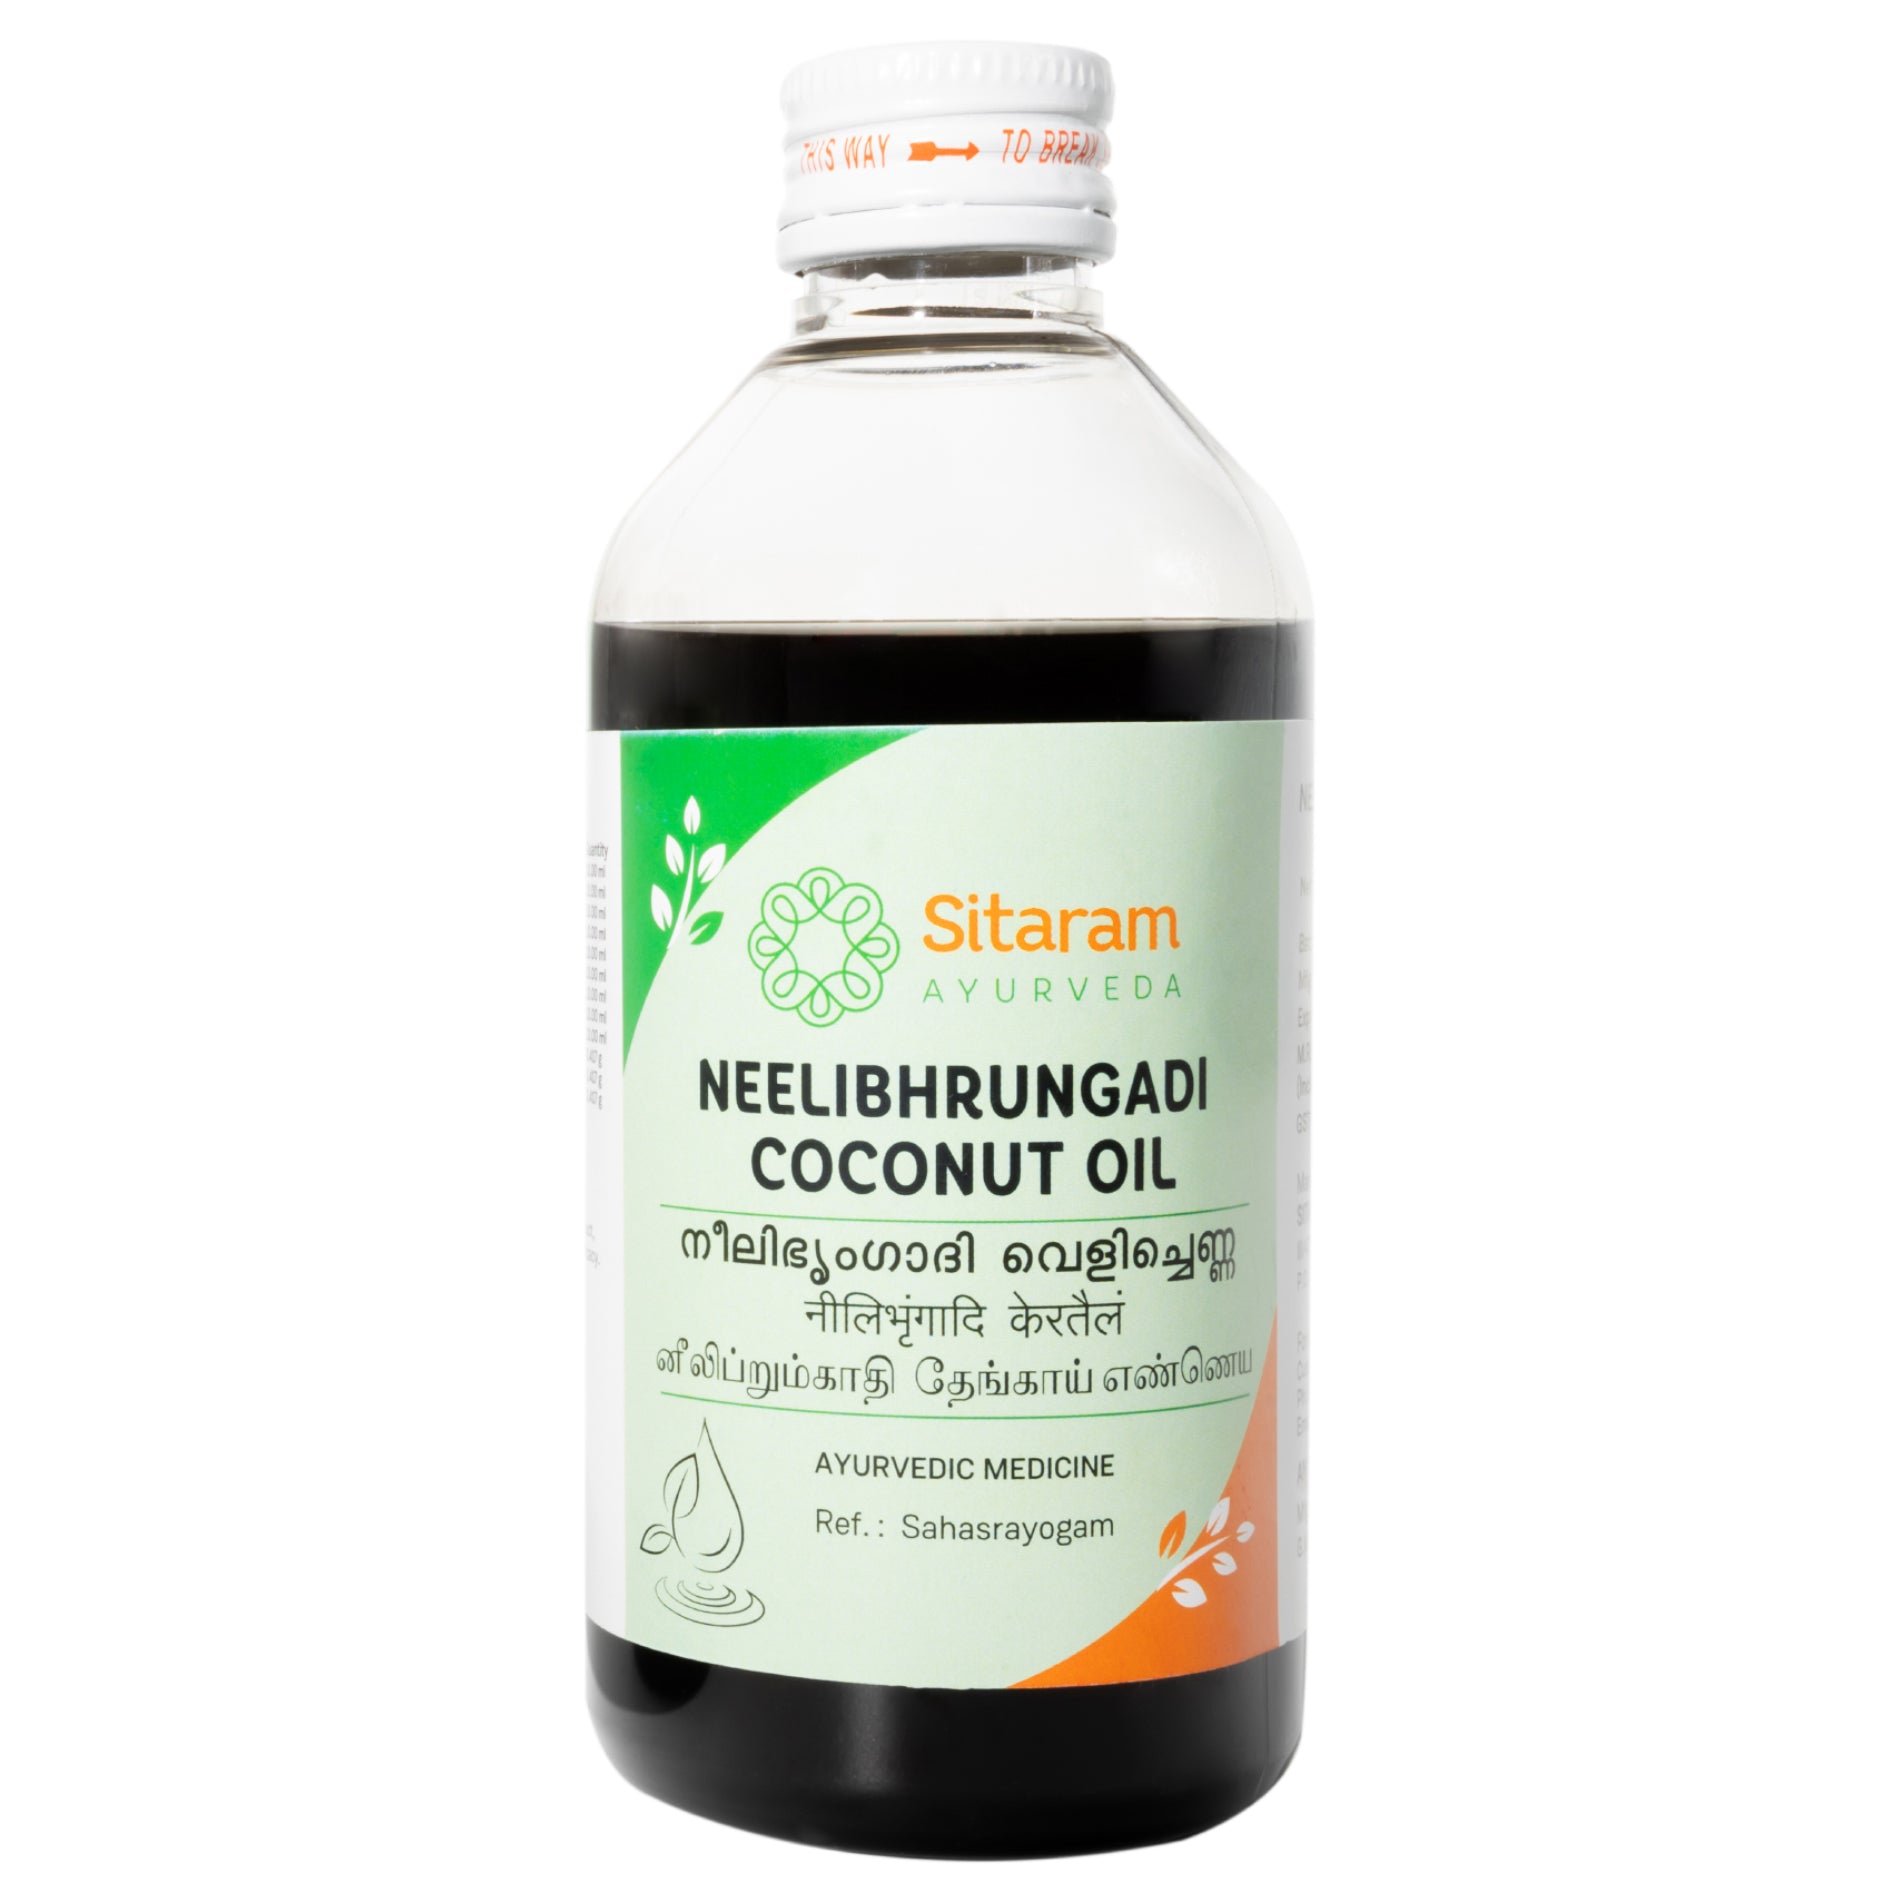 Sitaram Ayurveda Neelibringadi Coconut Oil 200 Ml (Prescription Medication)